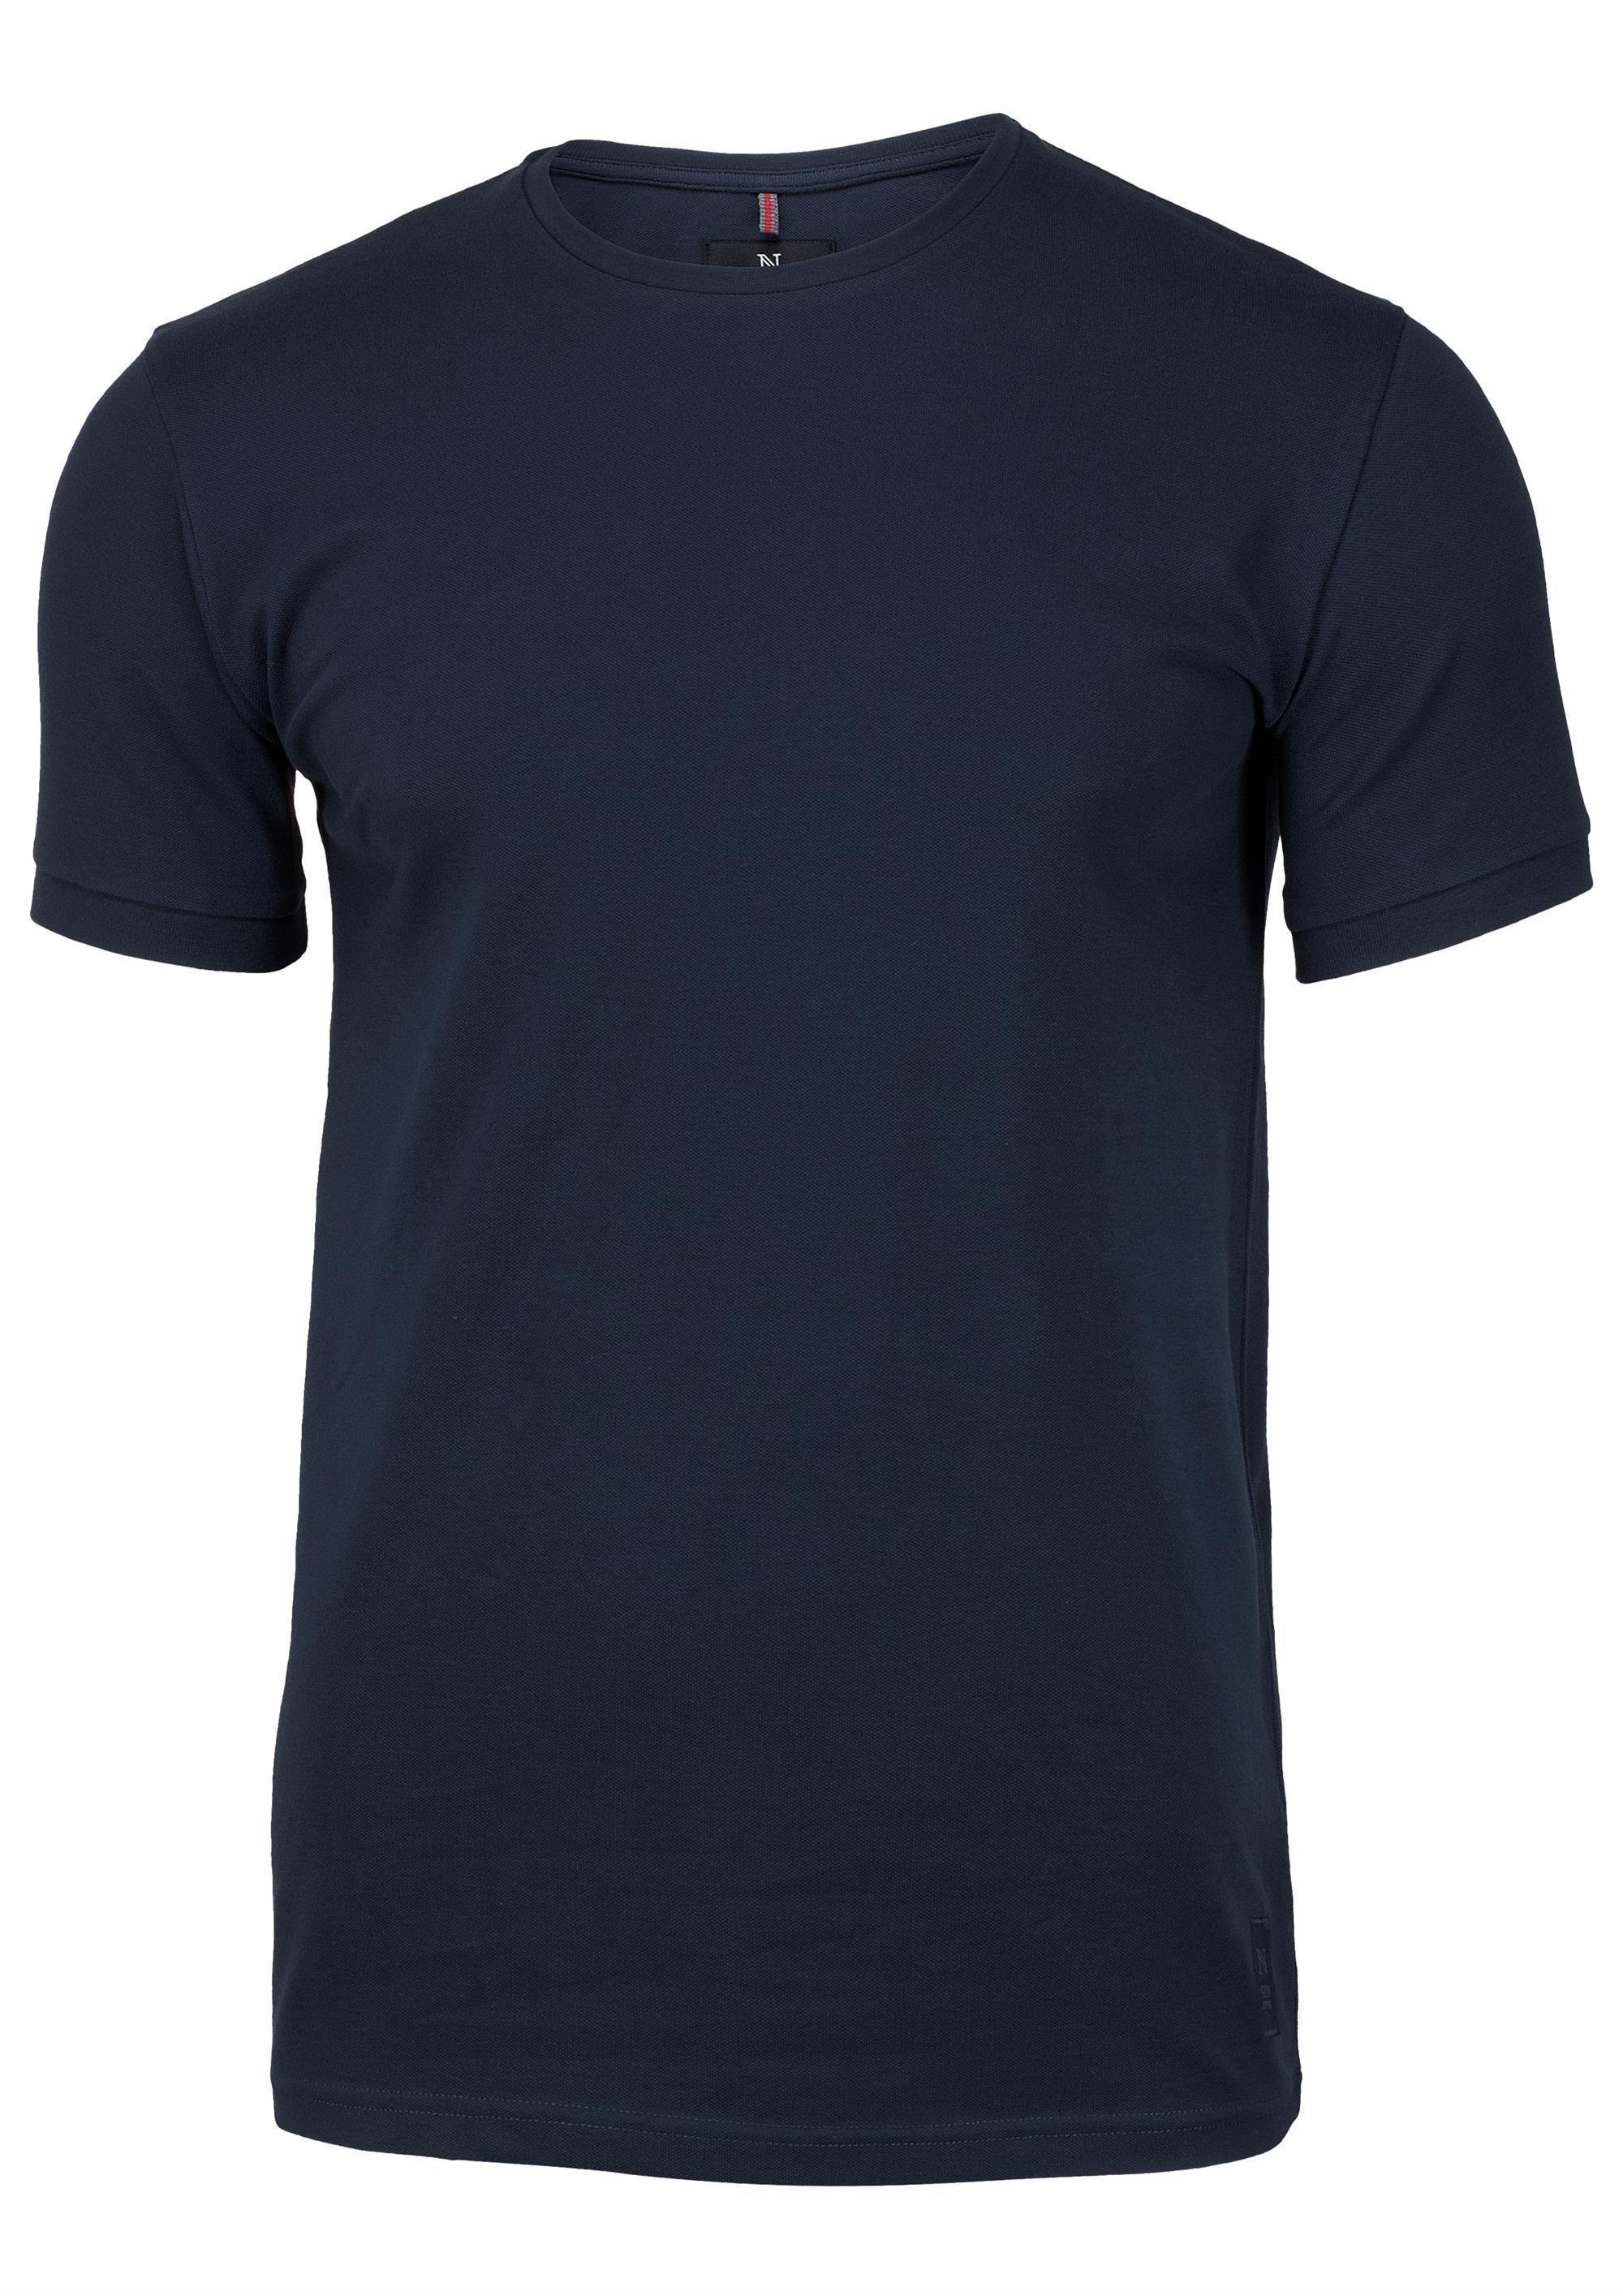 Men's organic cotton pique T-shirt Danbury 230 g/m² Nimbus® navy 3XL